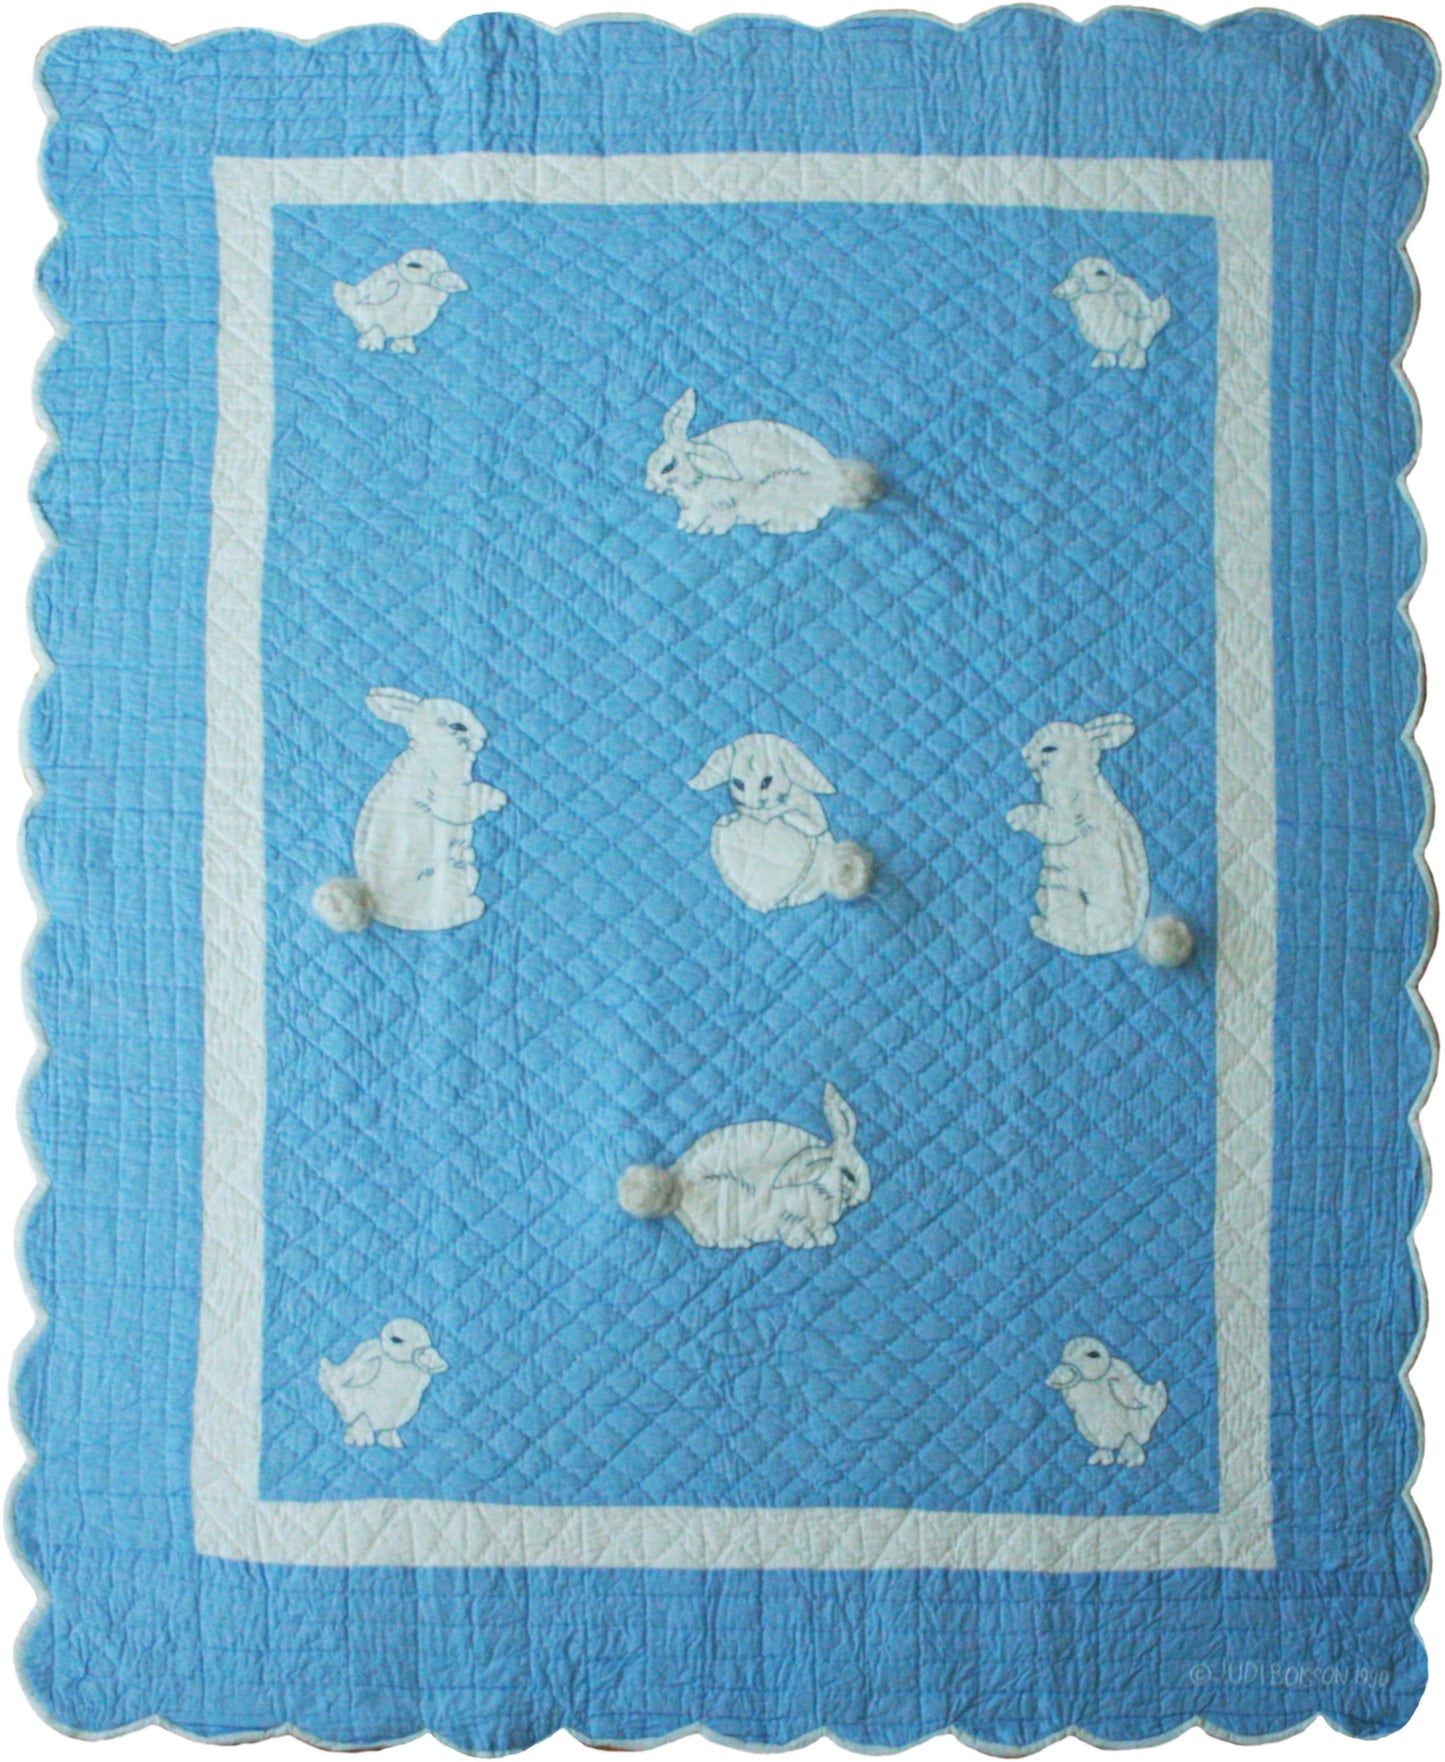 "Bunny" in Blue Crib Quilt 41" x 52"